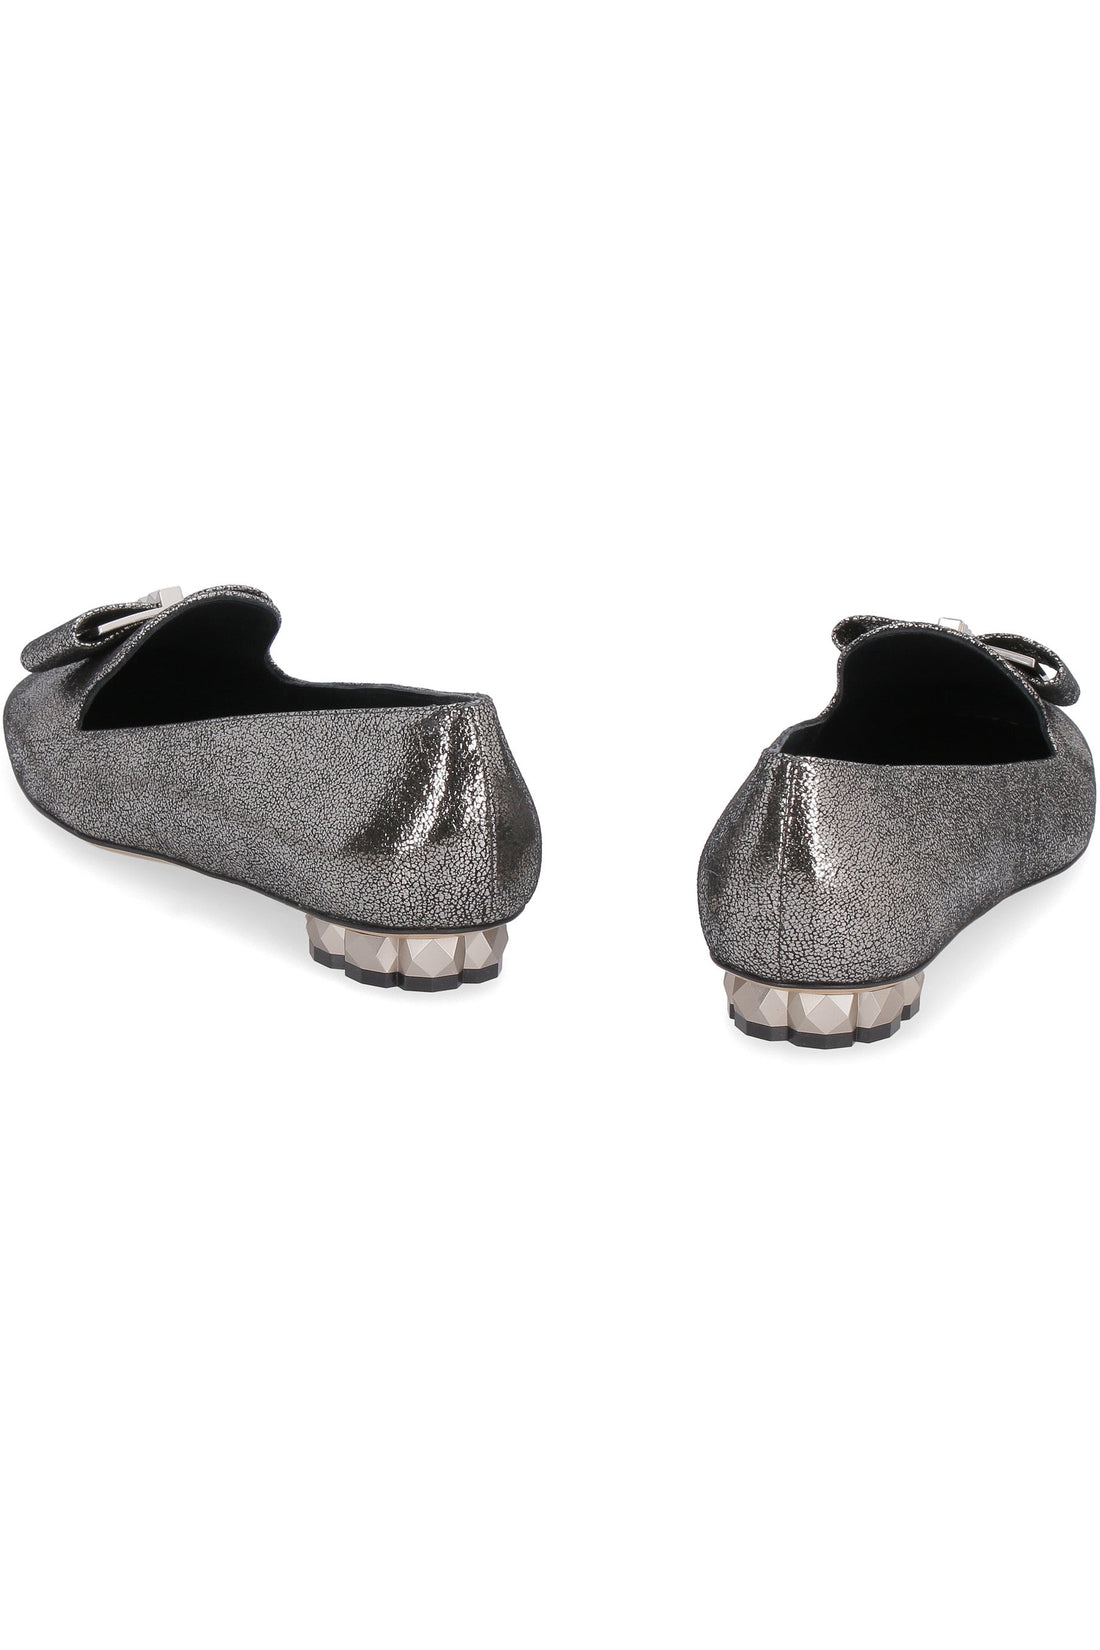 Salvatore Ferragamo-OUTLET-SALE-Sarno metallic leather loafers-ARCHIVIST